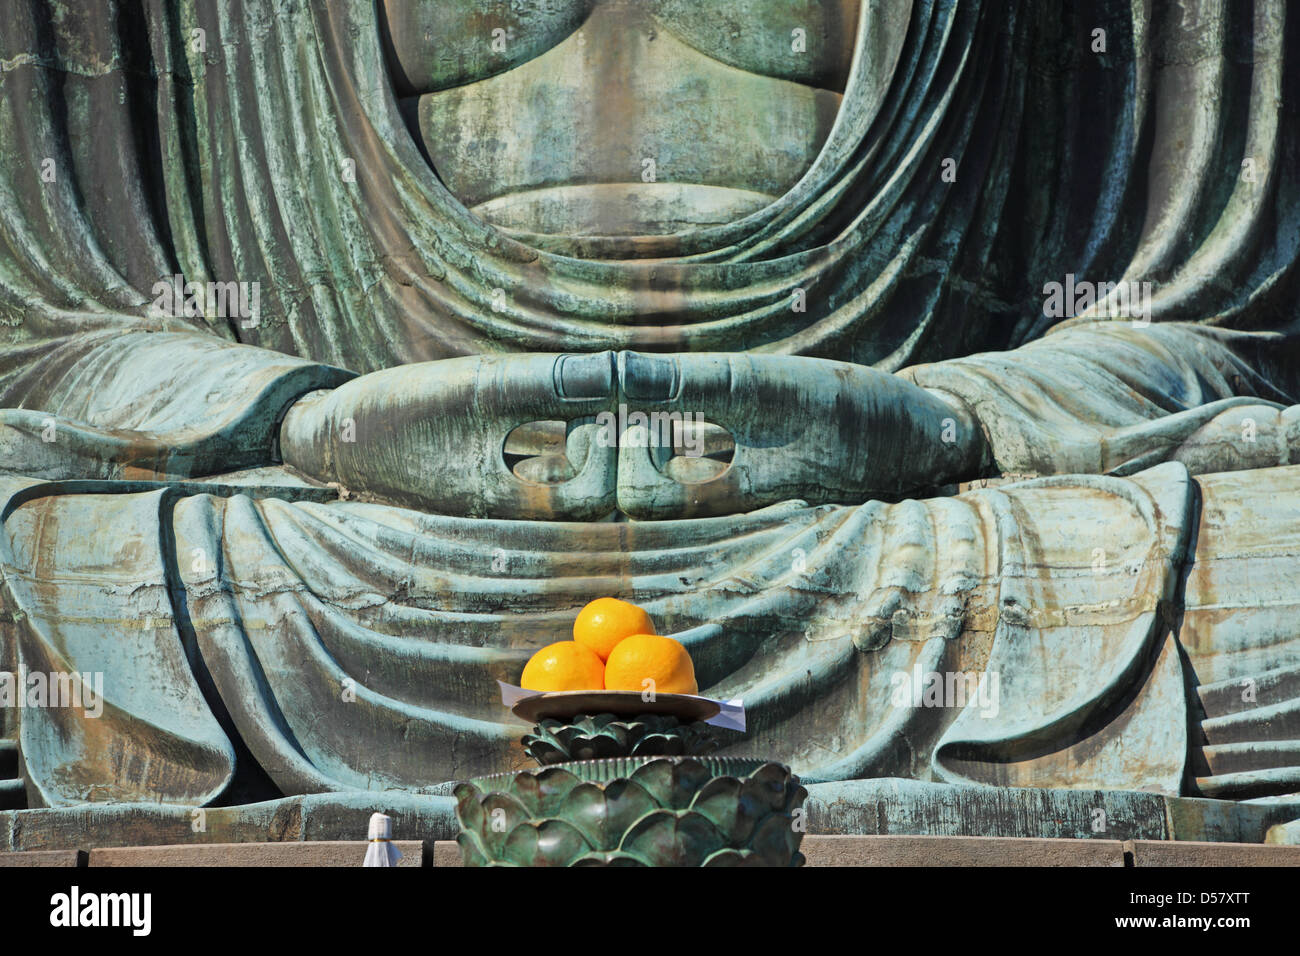 Japan, Kanagawa Prefecture, the Great Buddha of Kamakura Stock Photo